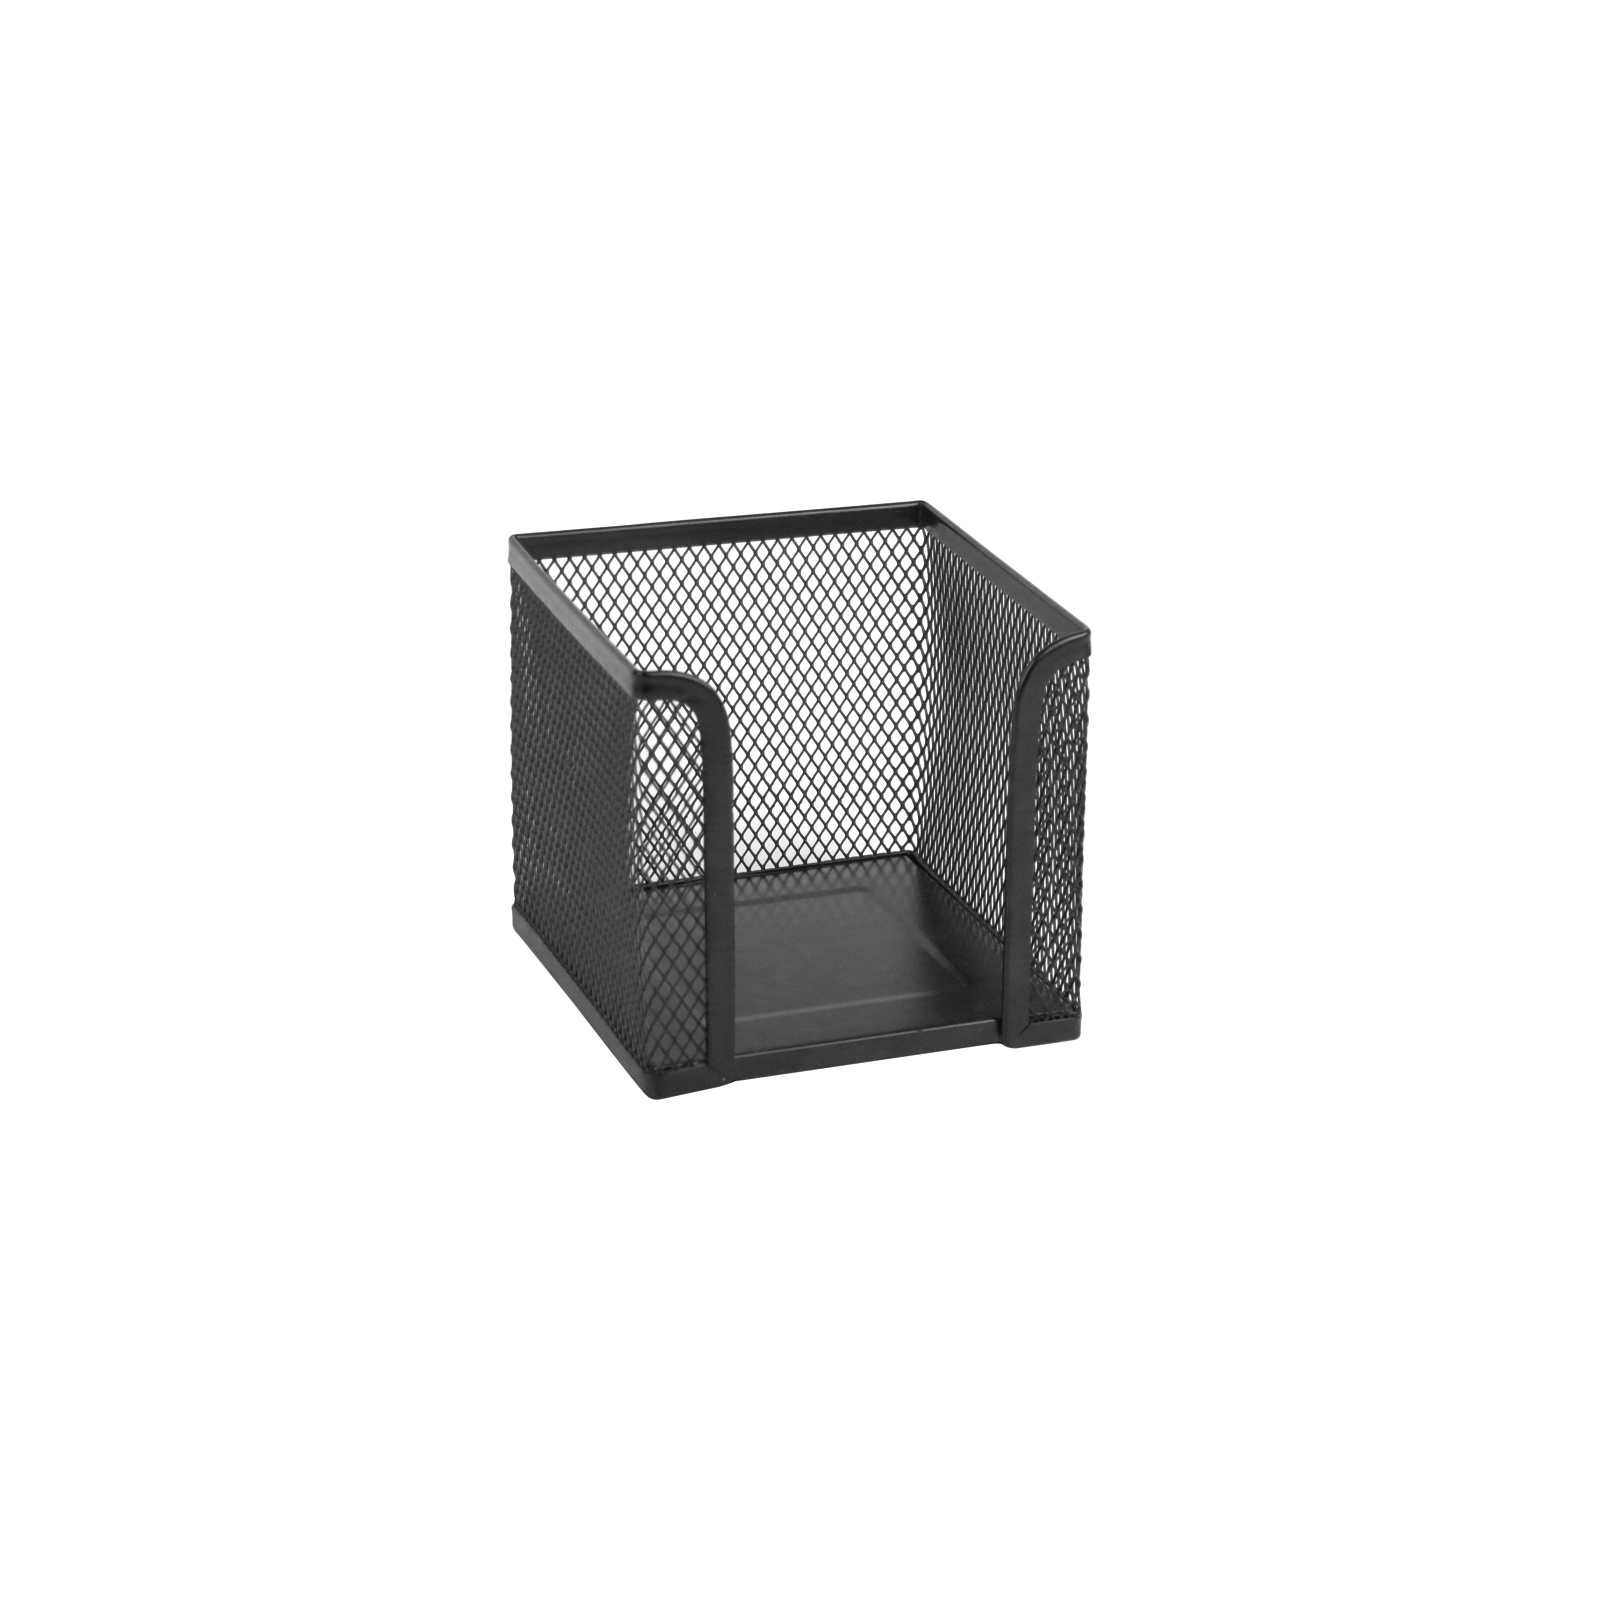 Подставка-куб для писем и бумаг Axent 100х100x100мм, wire mesh, black (2112-01-A)